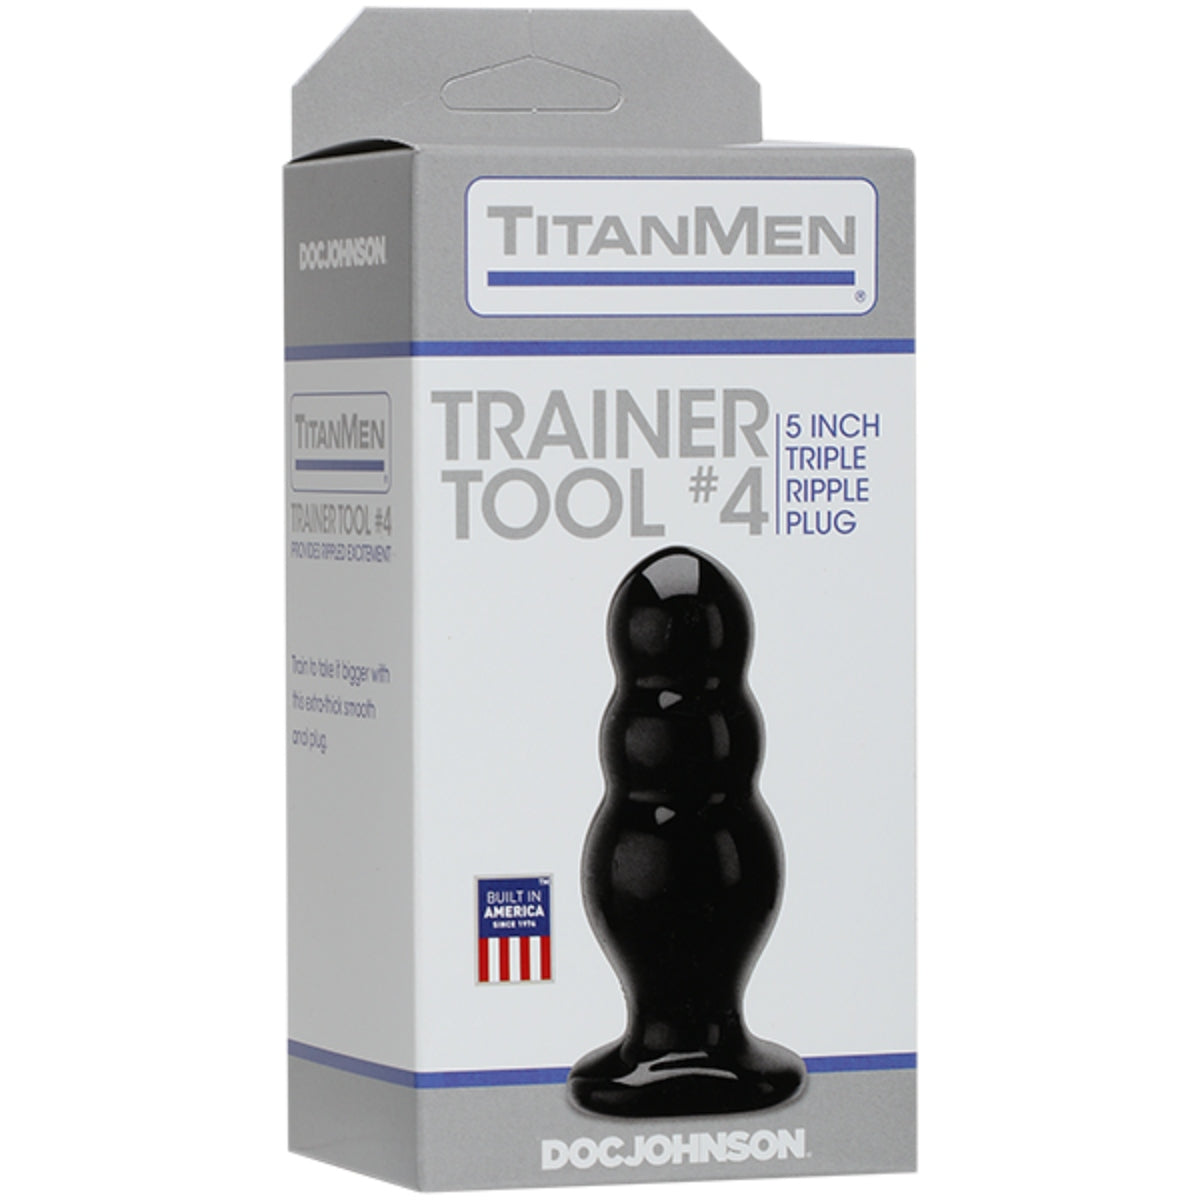 TitanMen Trainer Tool 4 Triple Ripple Butt Plug Black 5 Inch